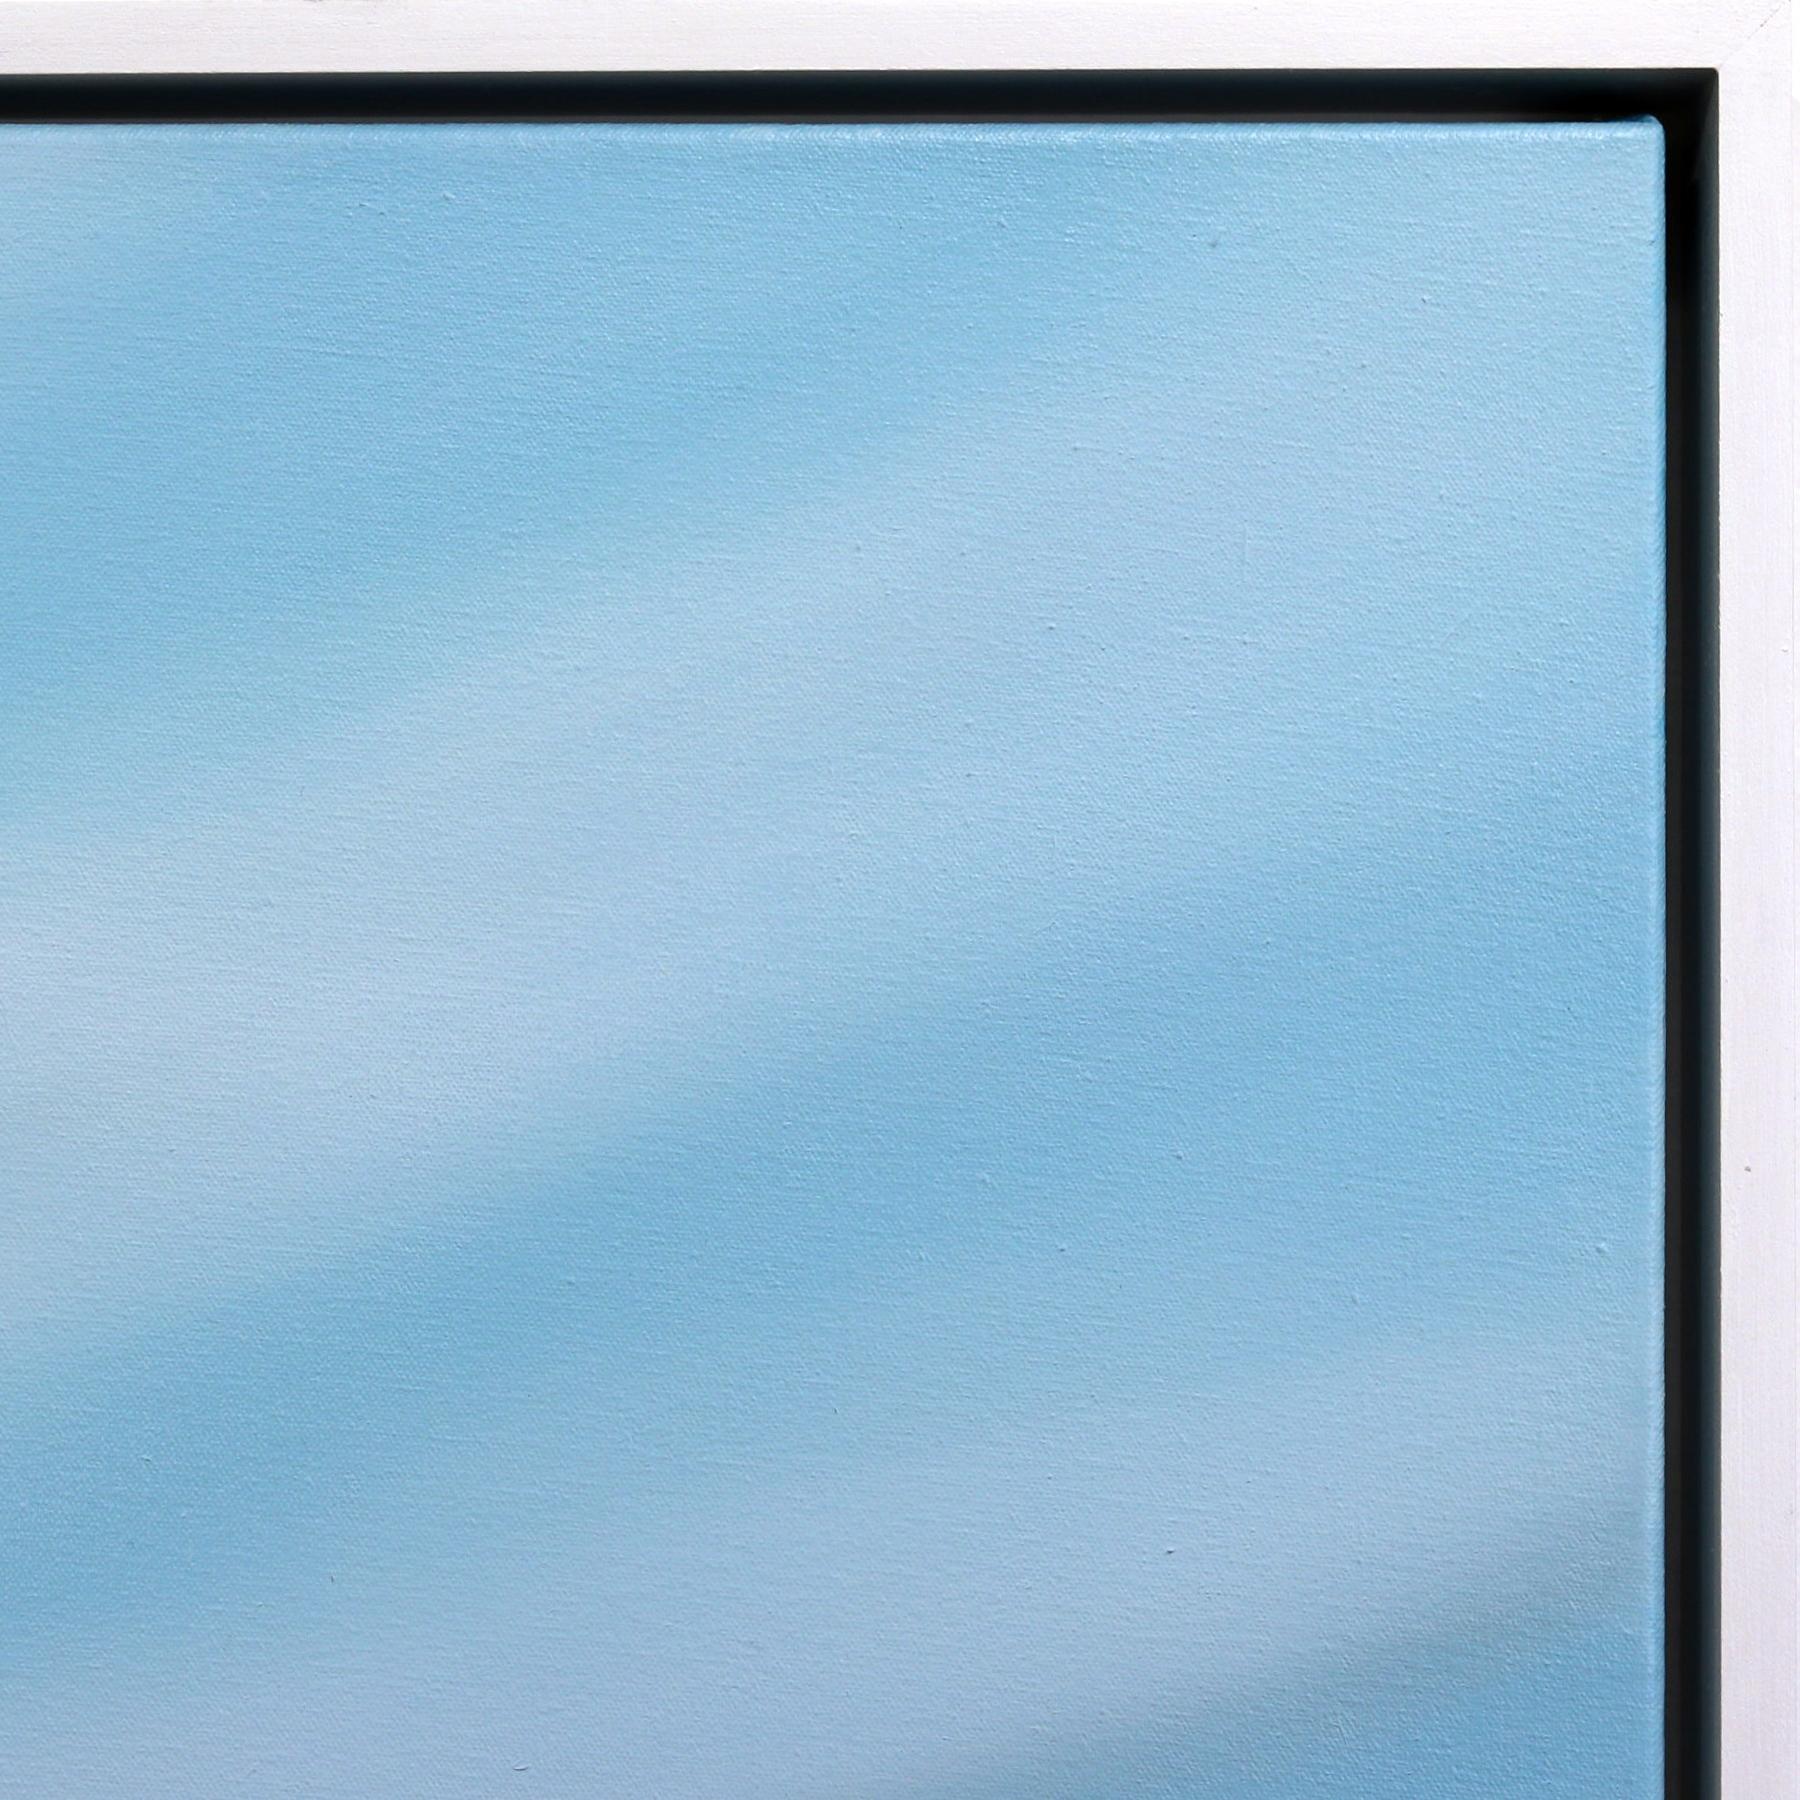 Untitled No. 762 - Framed Contemporary Minimalist Blue Landscape Ocean Artwork For Sale 3